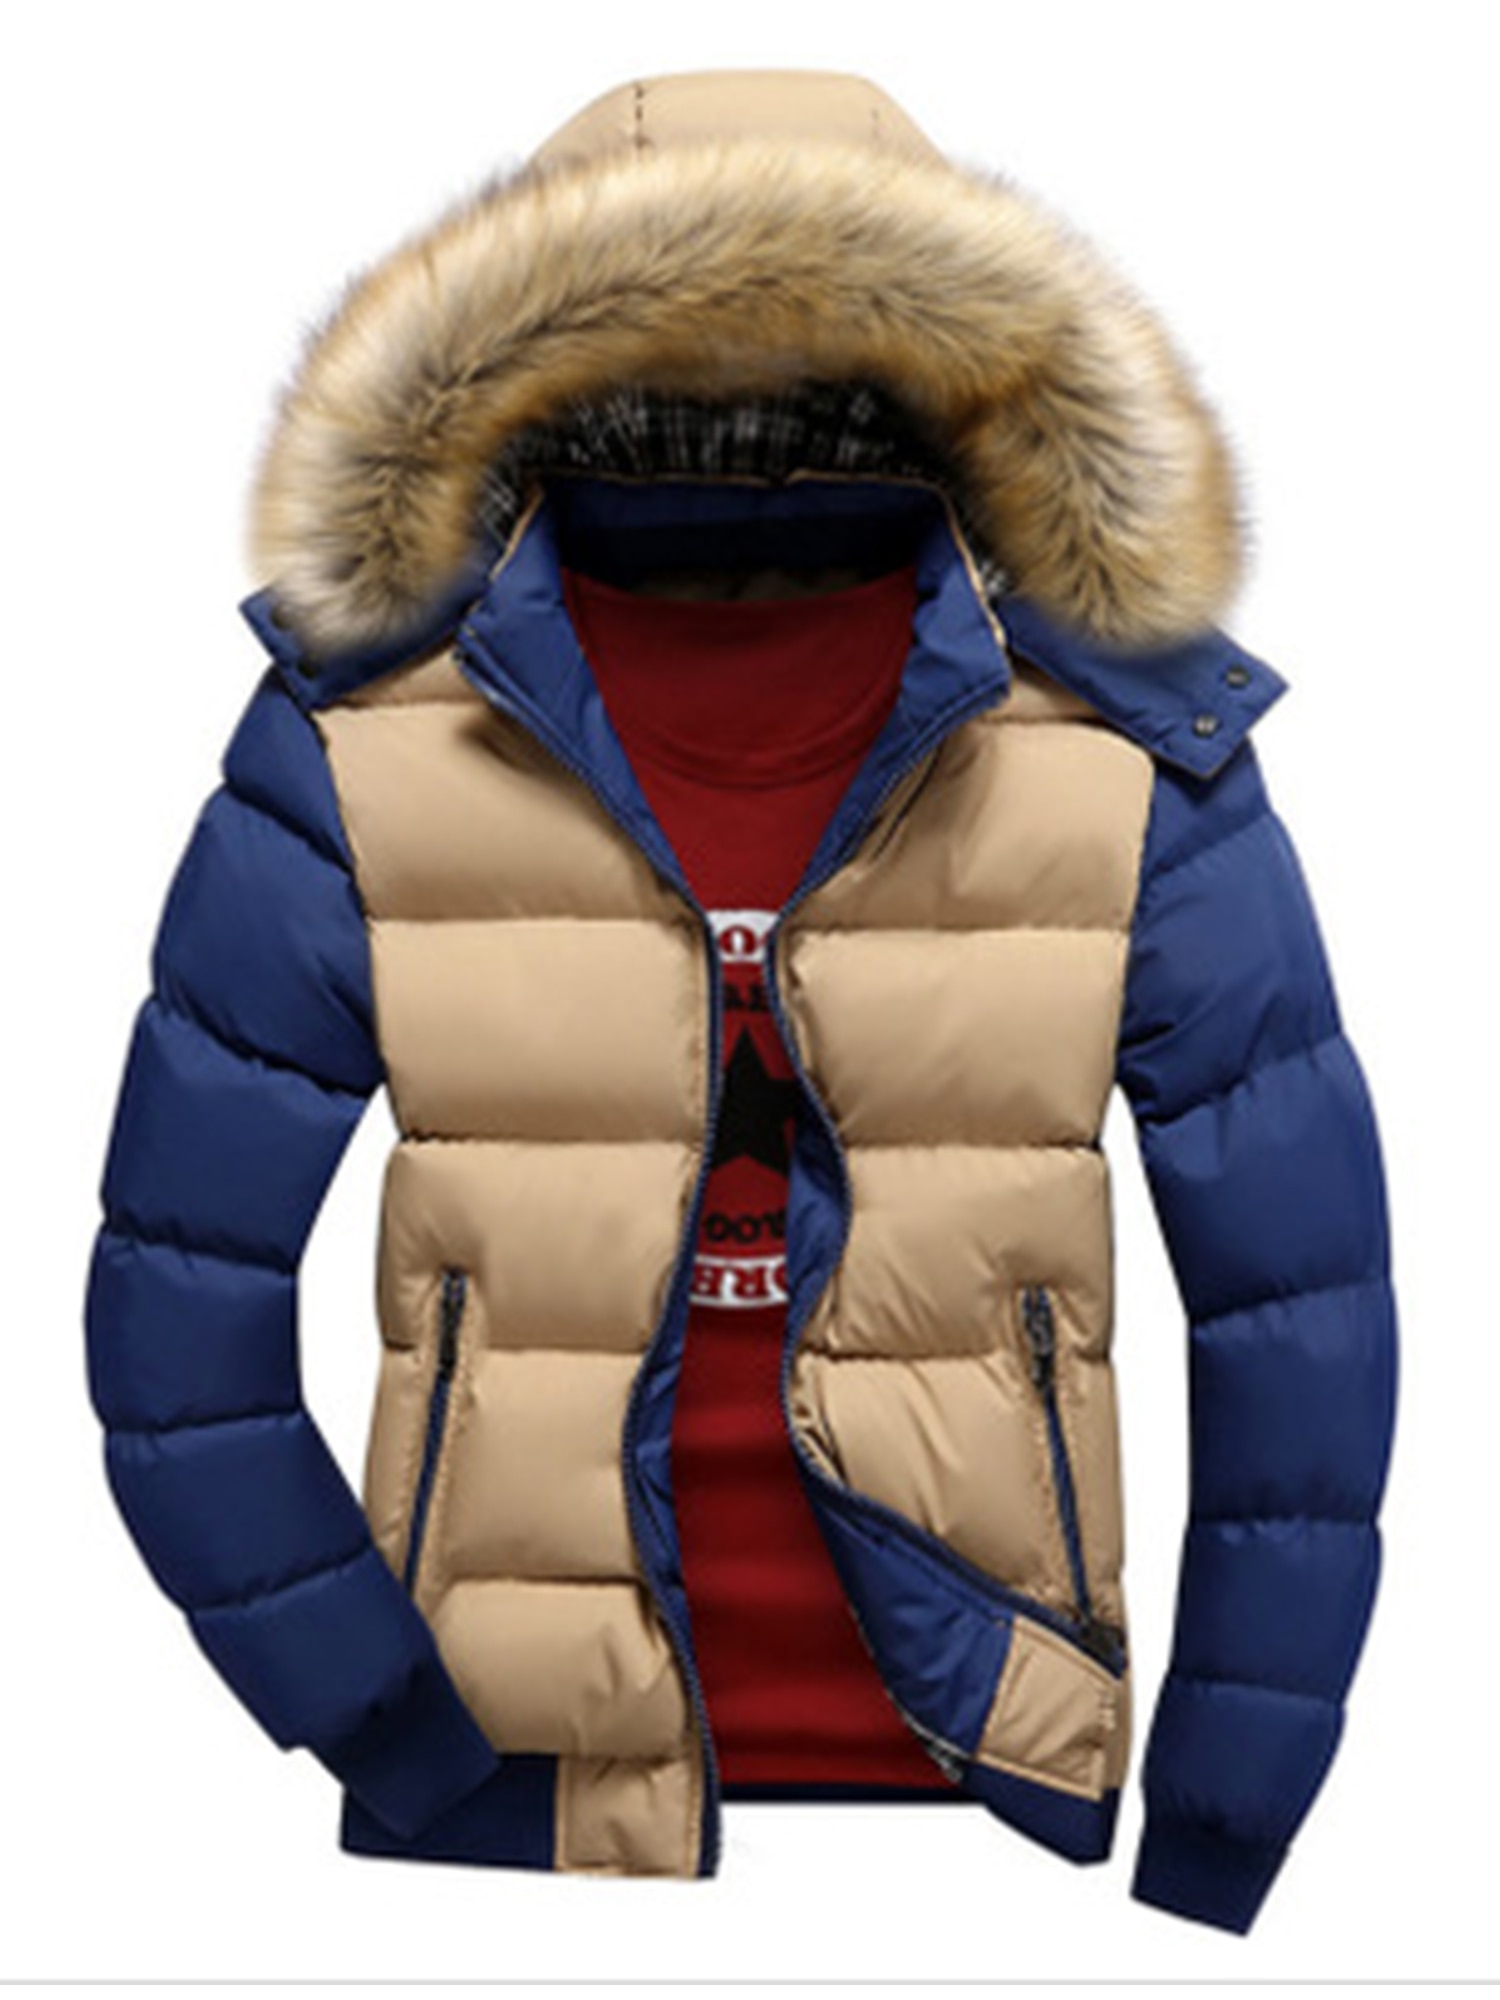 Plus Size Men Winter Warm Zipper Big Collar Hooded Coat Jacket Contrast Color Long Sleeve Hoody Hooded Parka Jacket Outwear - image 1 of 3